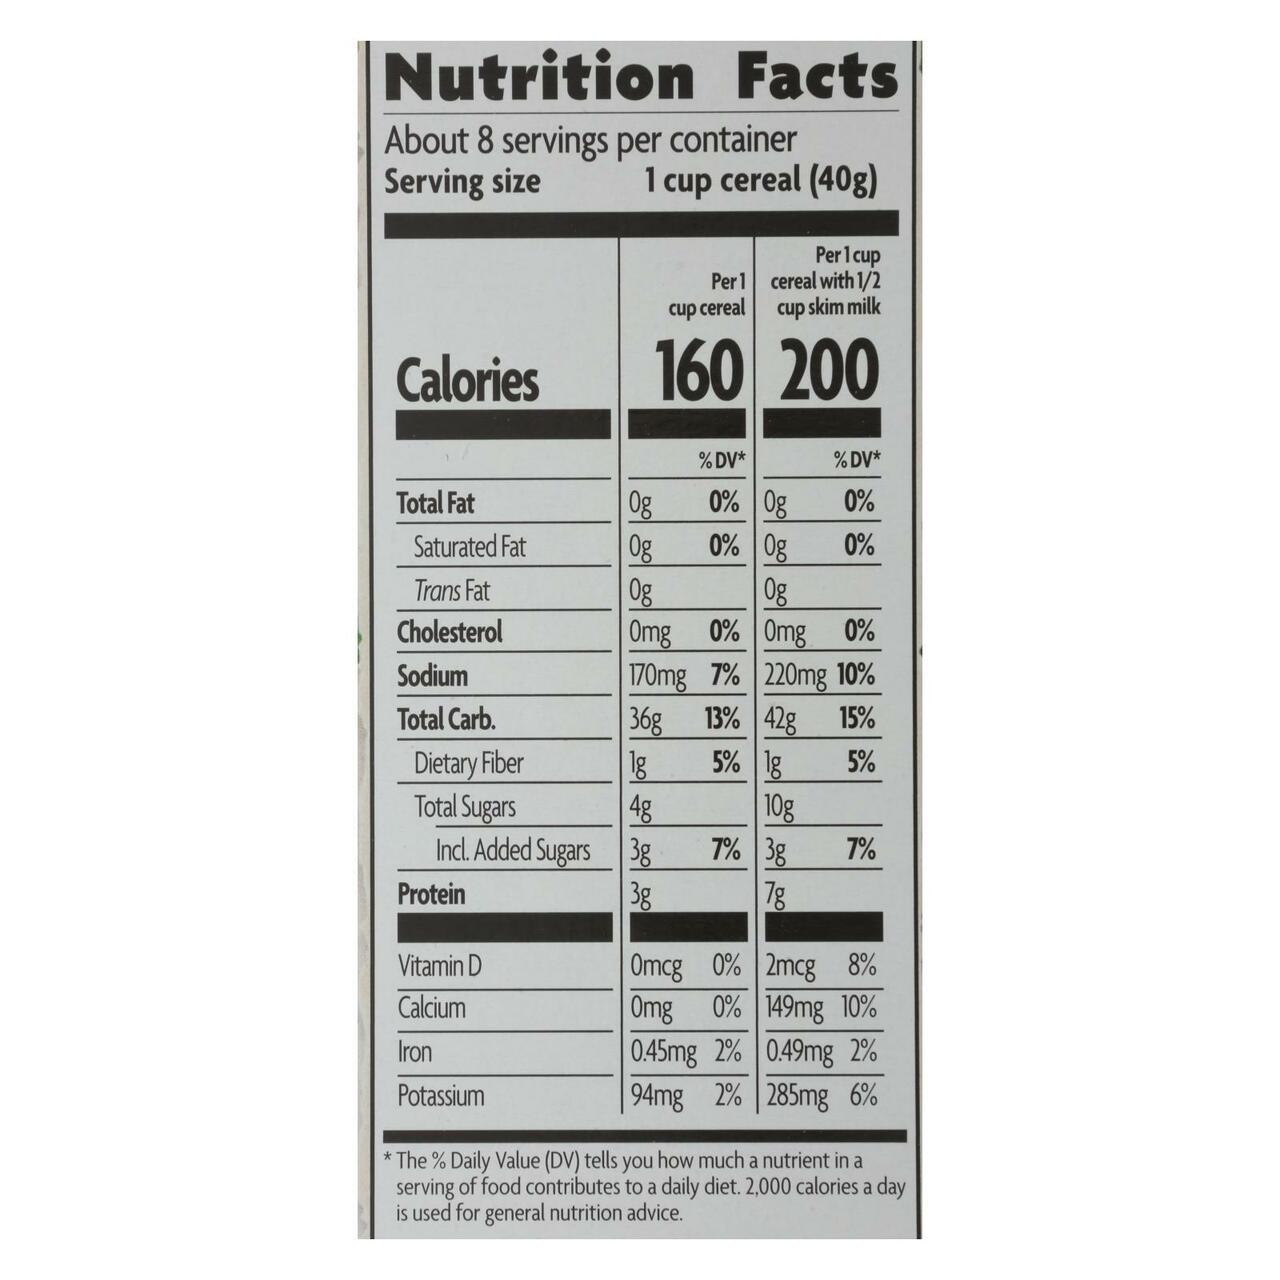 NATURES PATH Organic Fruit Juice Corn Flakes, 300gm - Sweetened Gluten-Free